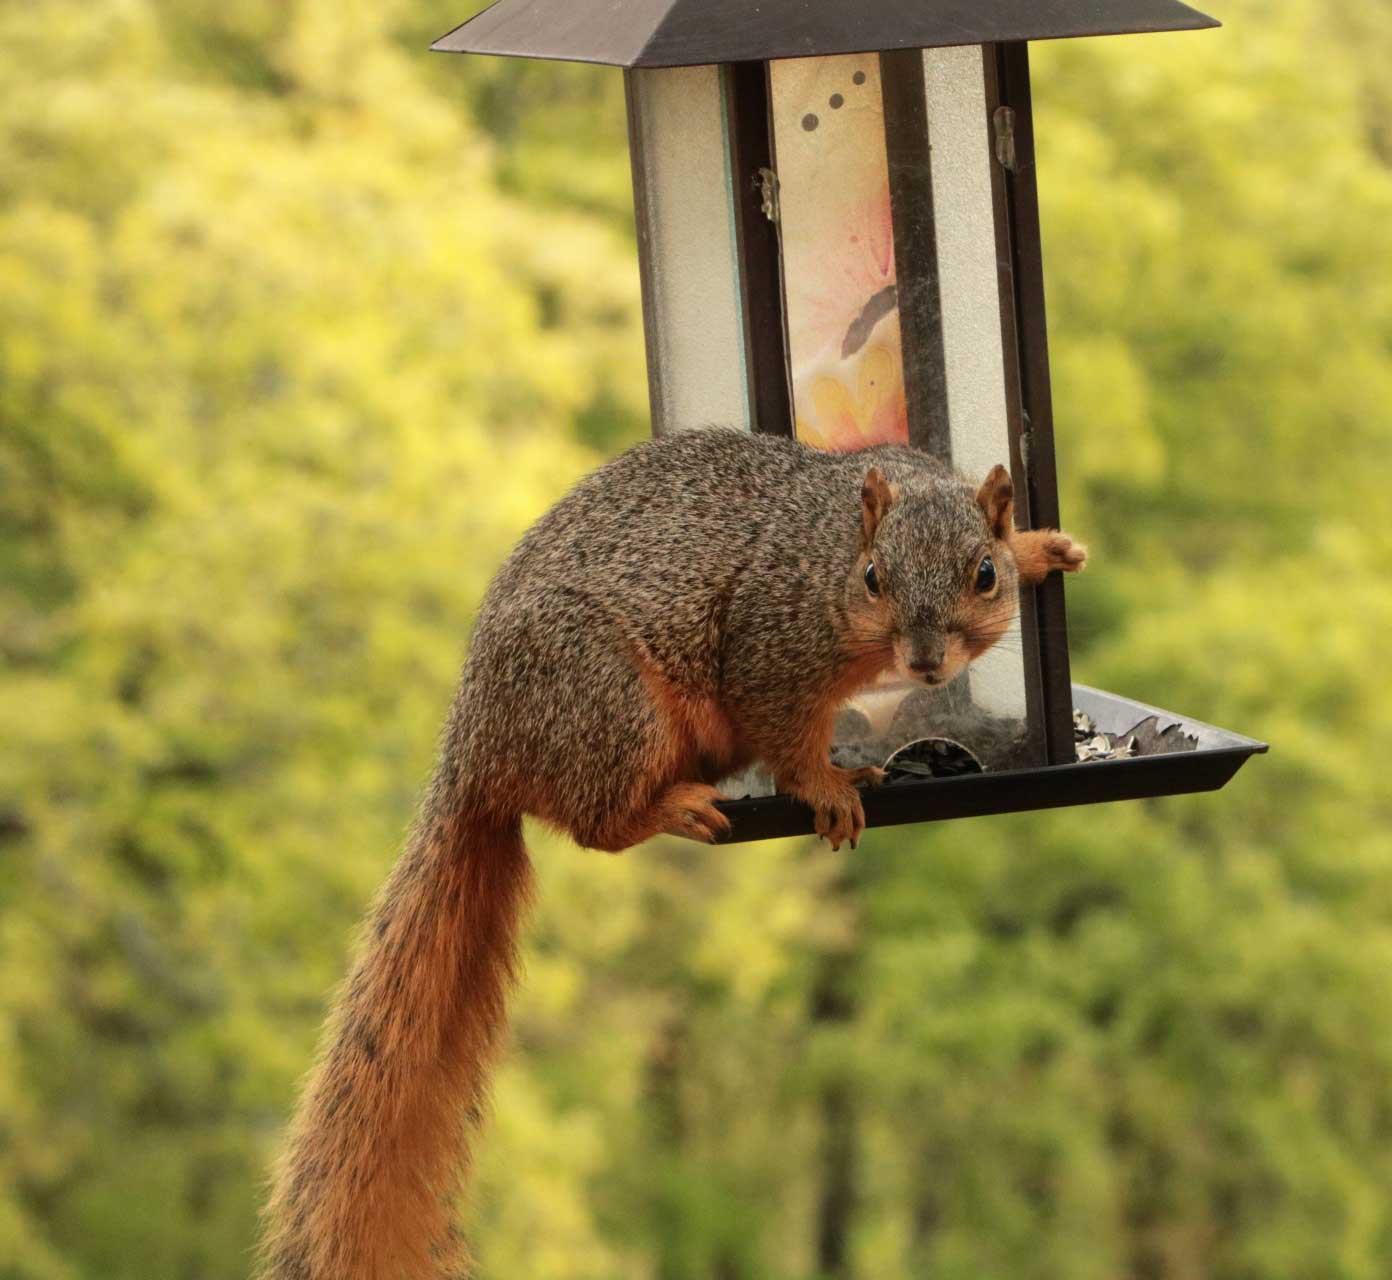 Squirrel raiding a bird feeder - critters in the garden flowers